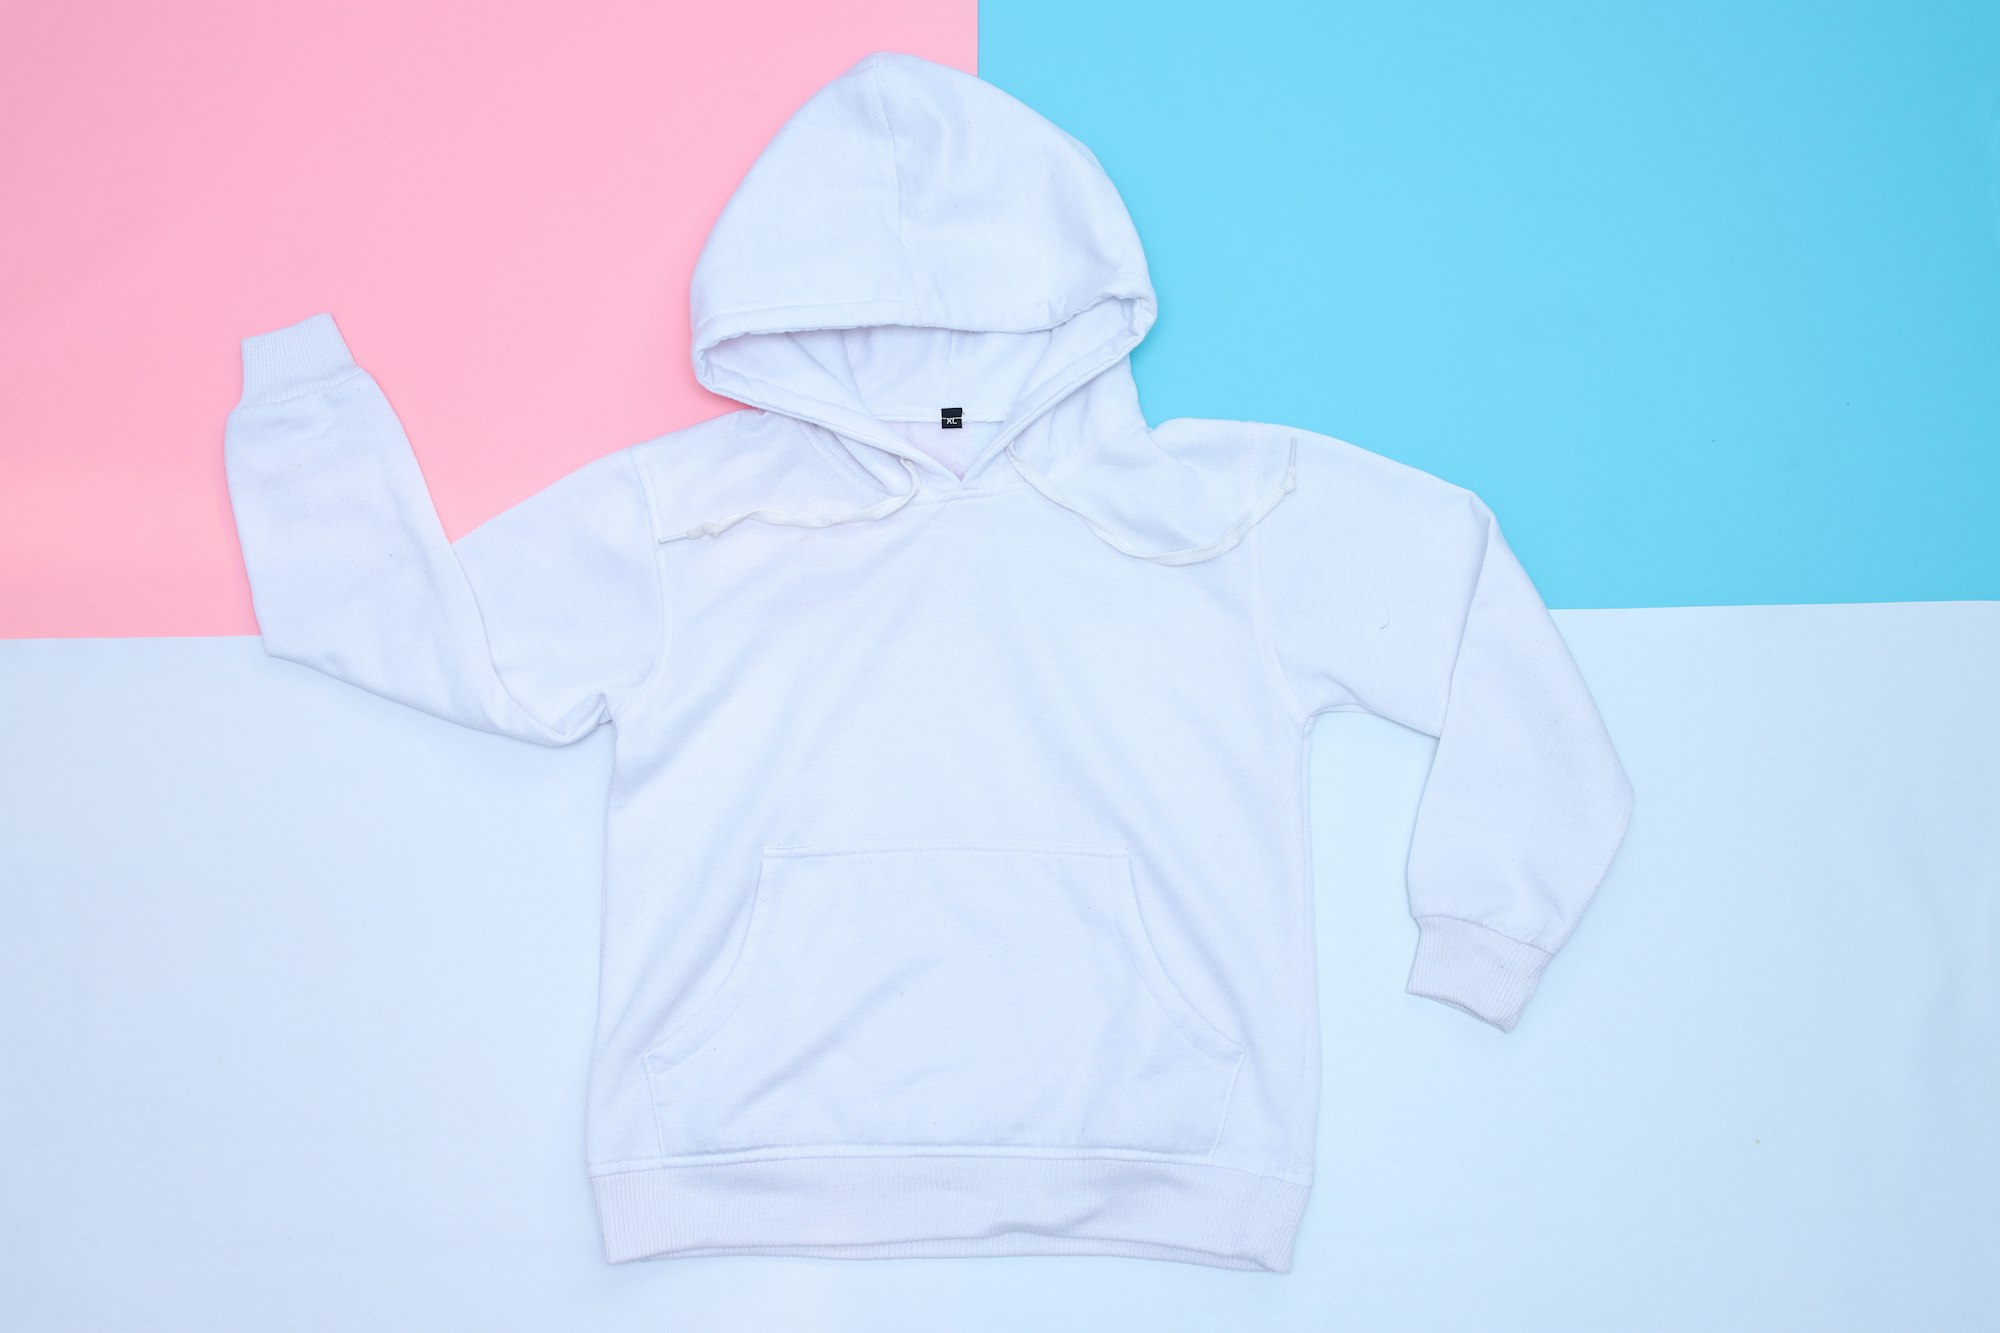 Place it - Blank sweatshirt mock up for design print